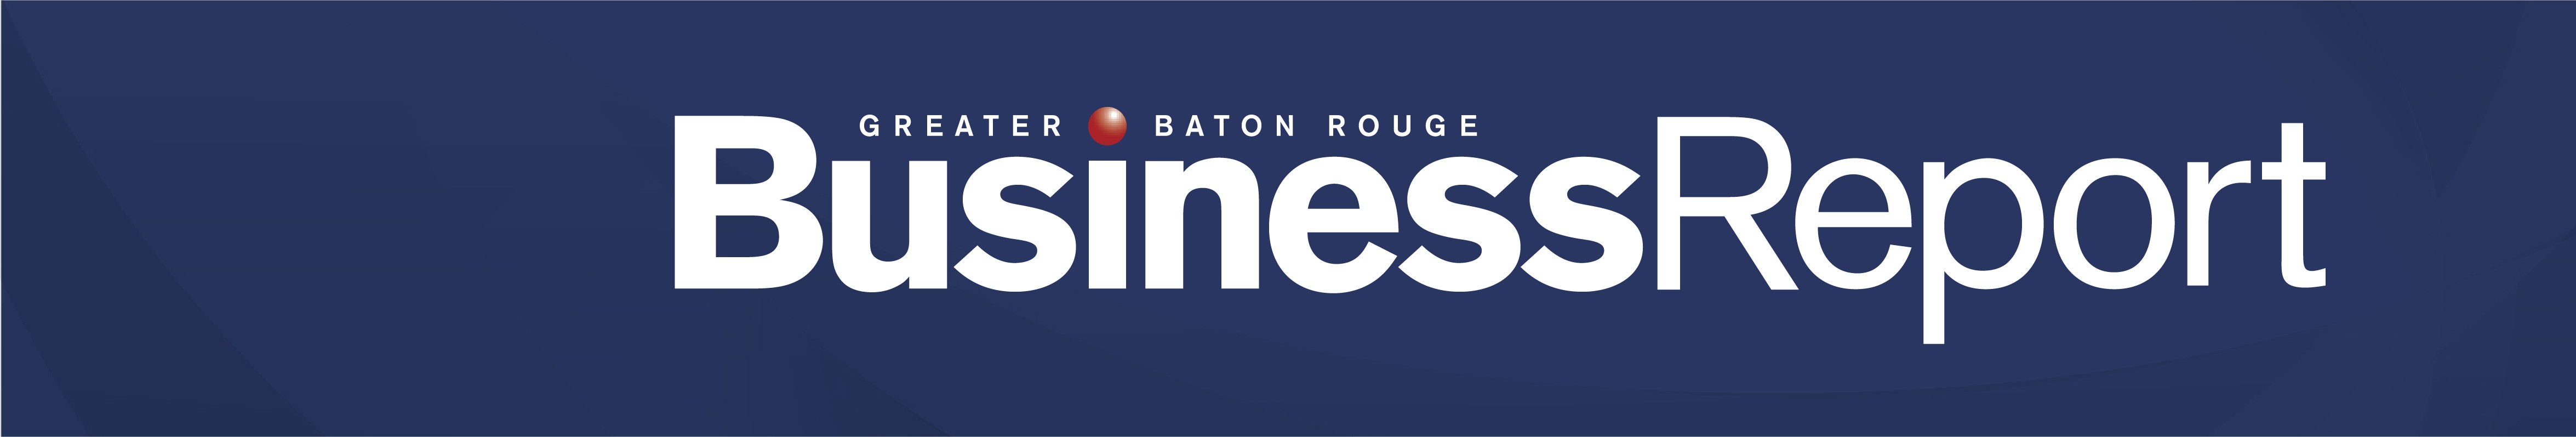 Baton Rouge Business Report on LinkedIn: Thomas Morse Jr. chosen as ...